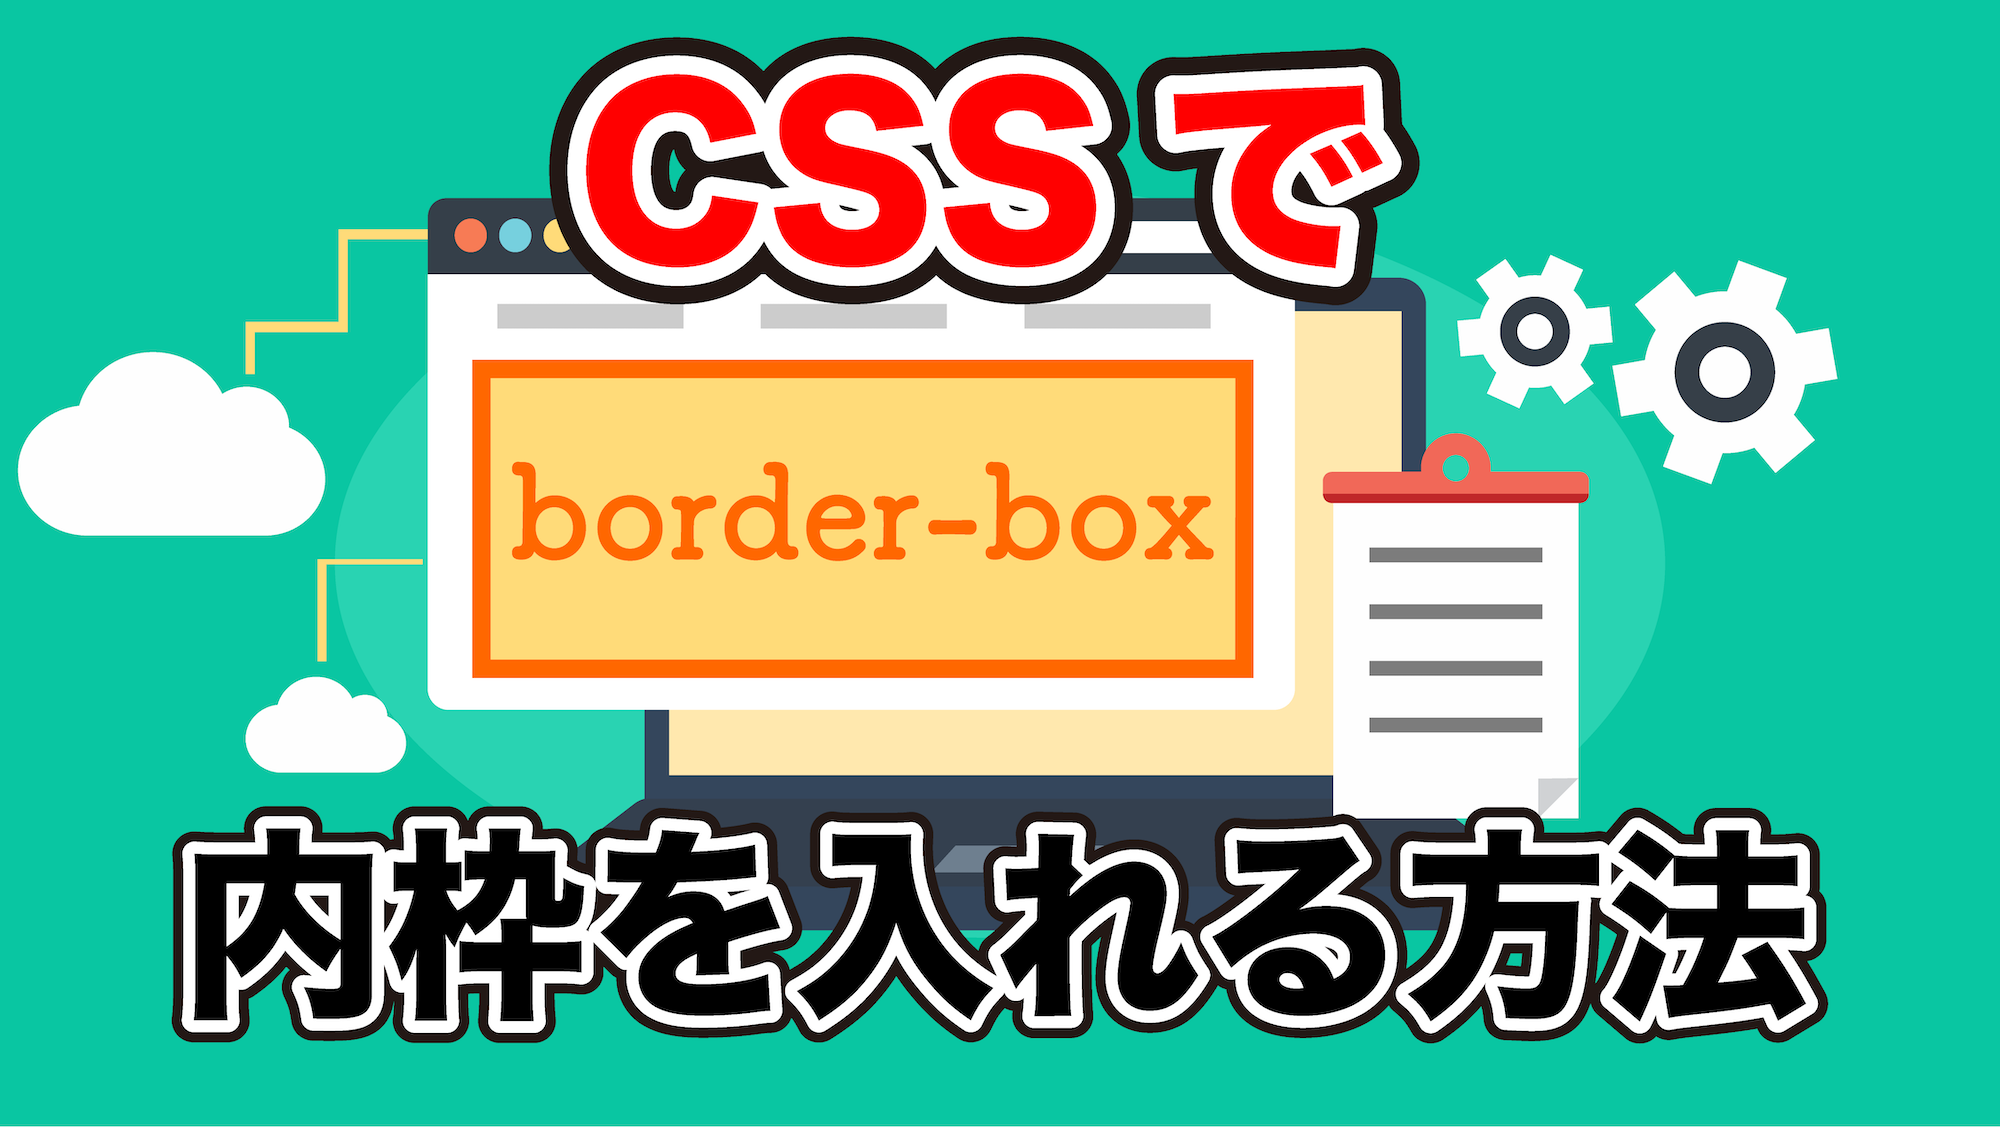 CSS, ボックスデザイン, border, 枠線, プログラミング